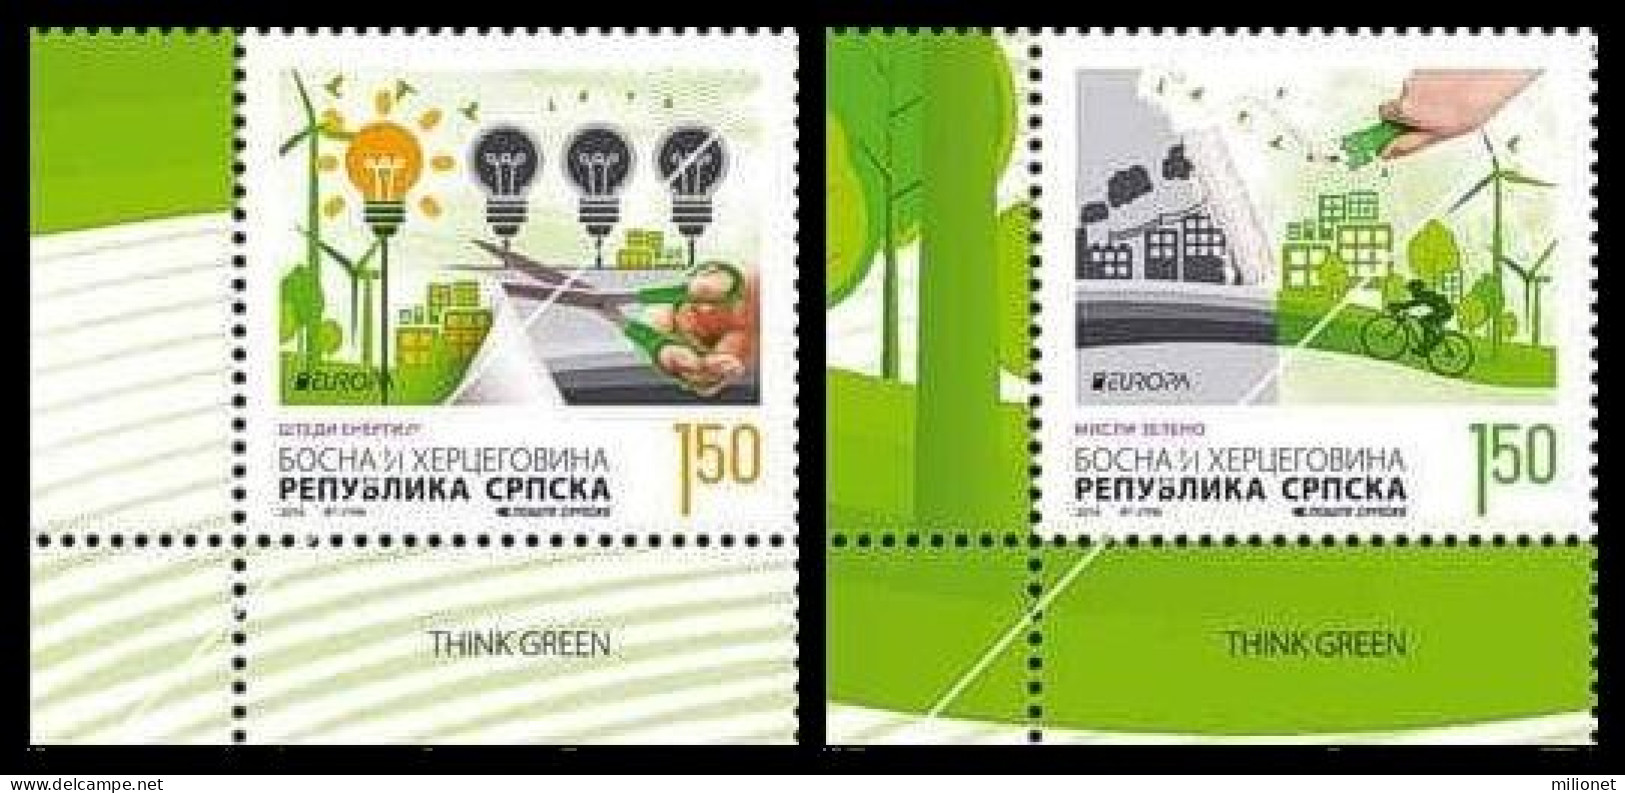 SALE!!! BOSNIA HERZEGOVINA SERBIA SERB POST PALE BOSNIE BOSNIEN 2016 EUROPA CEPT THINK GREEN 2 Stamps Set MNH ** - 2016